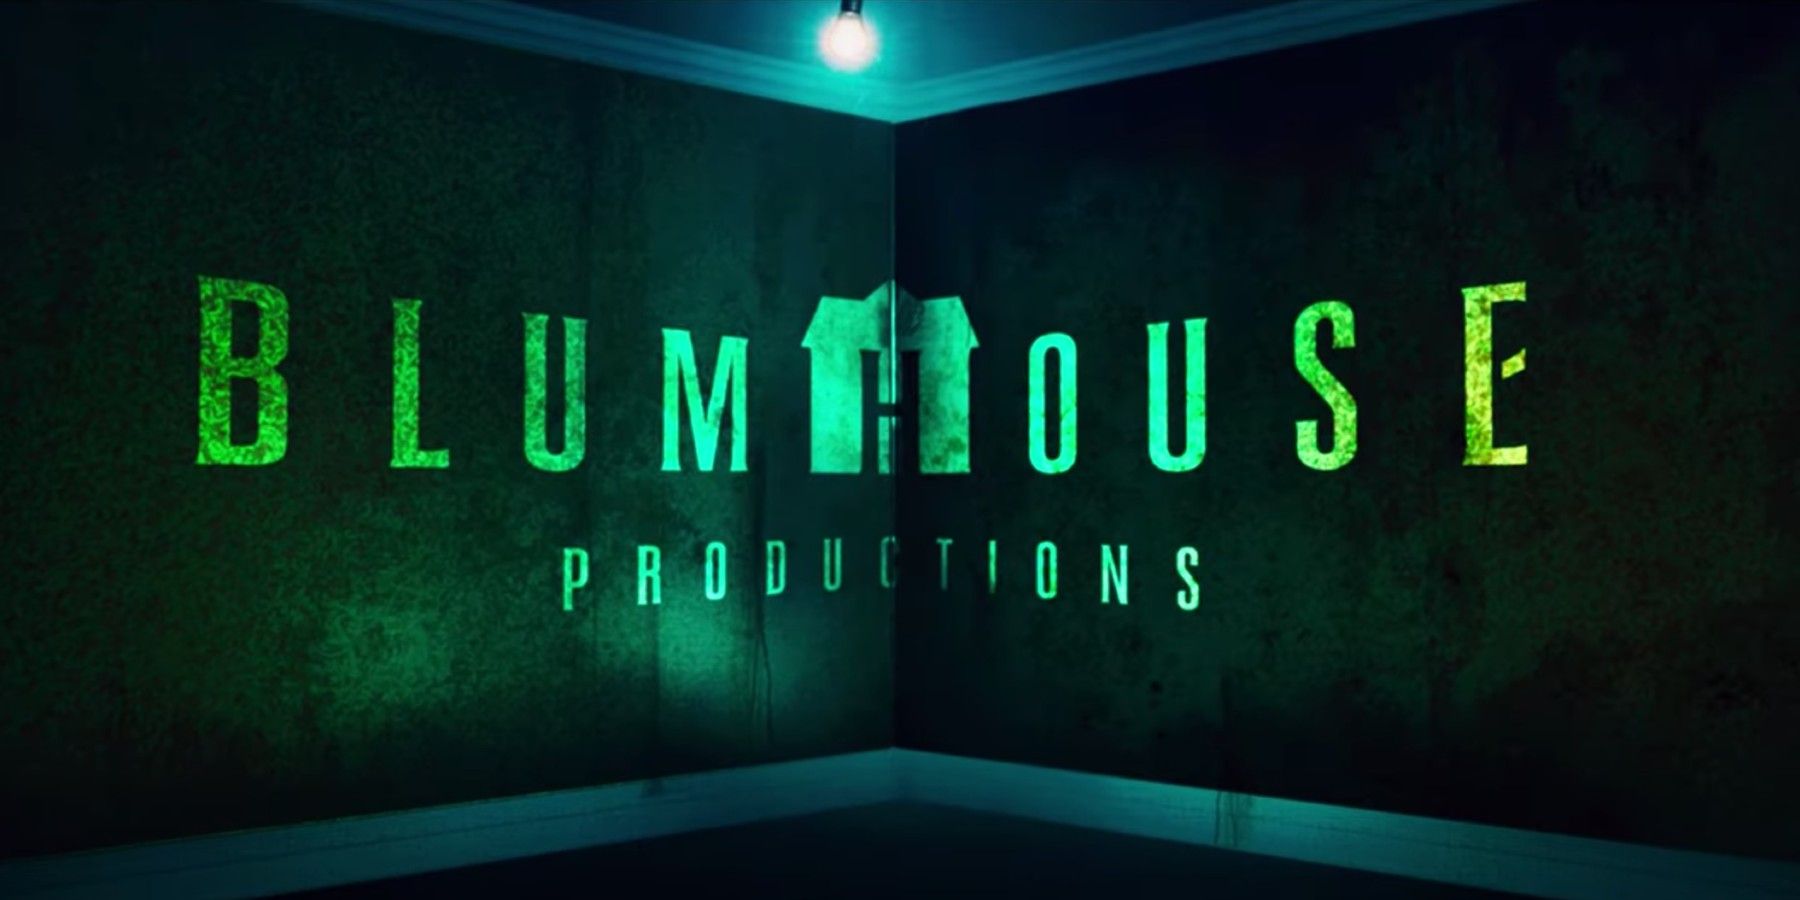 Blumhouse Productions